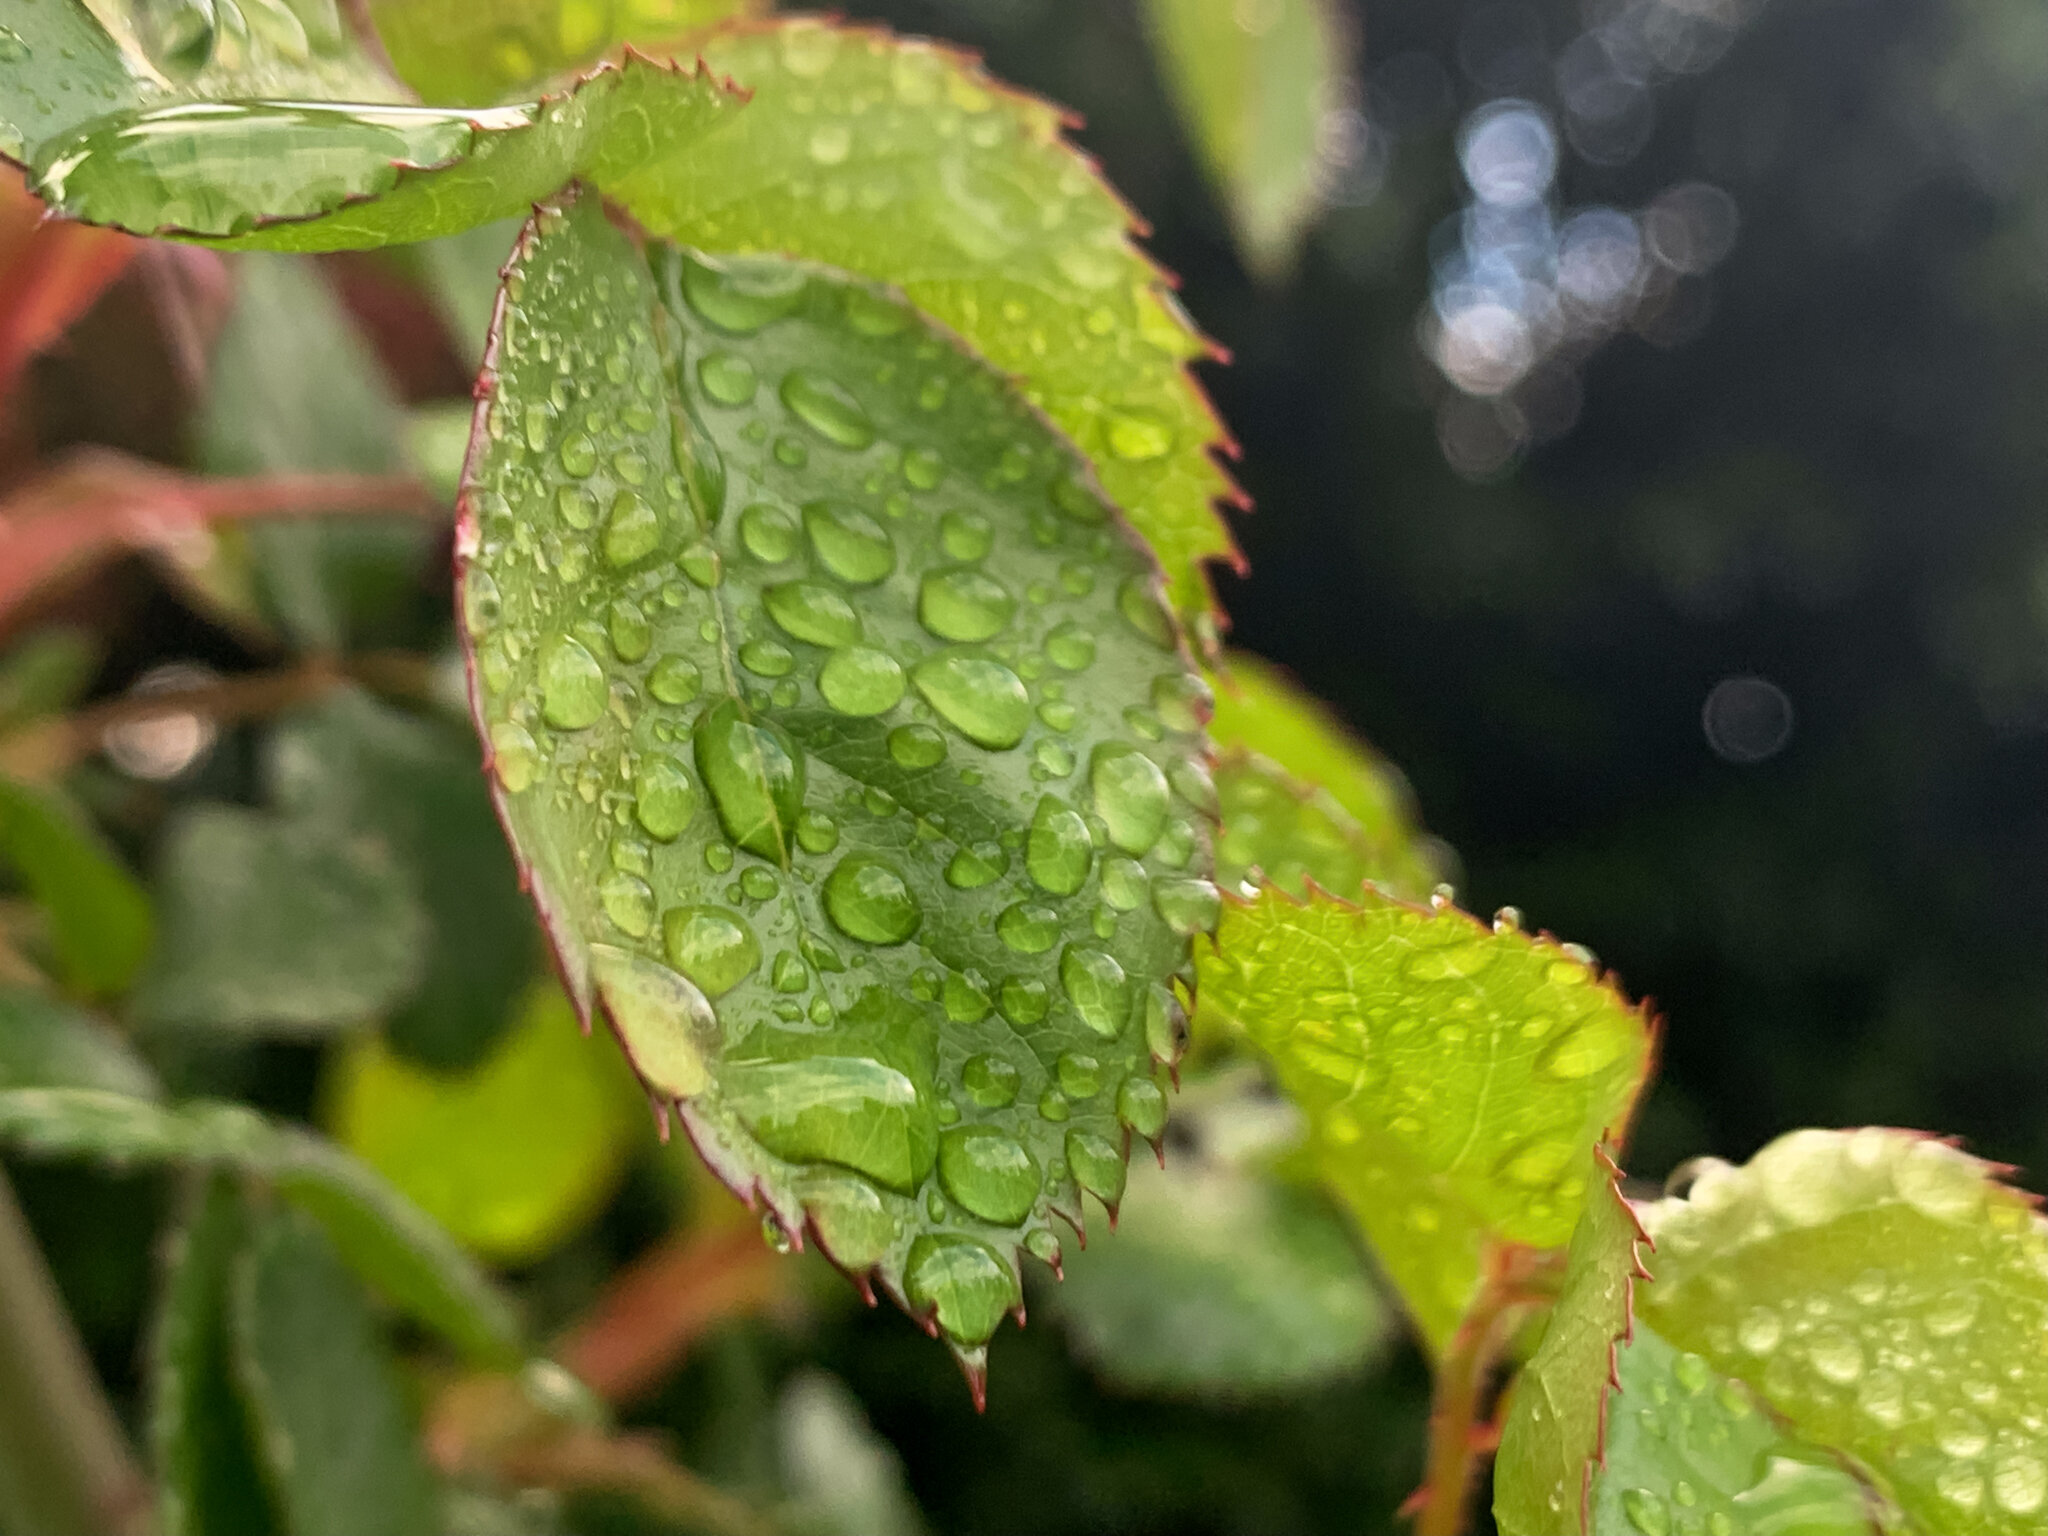  Water droplets on rose leaves nature photography by Lenka Vodicka Lenkaland 